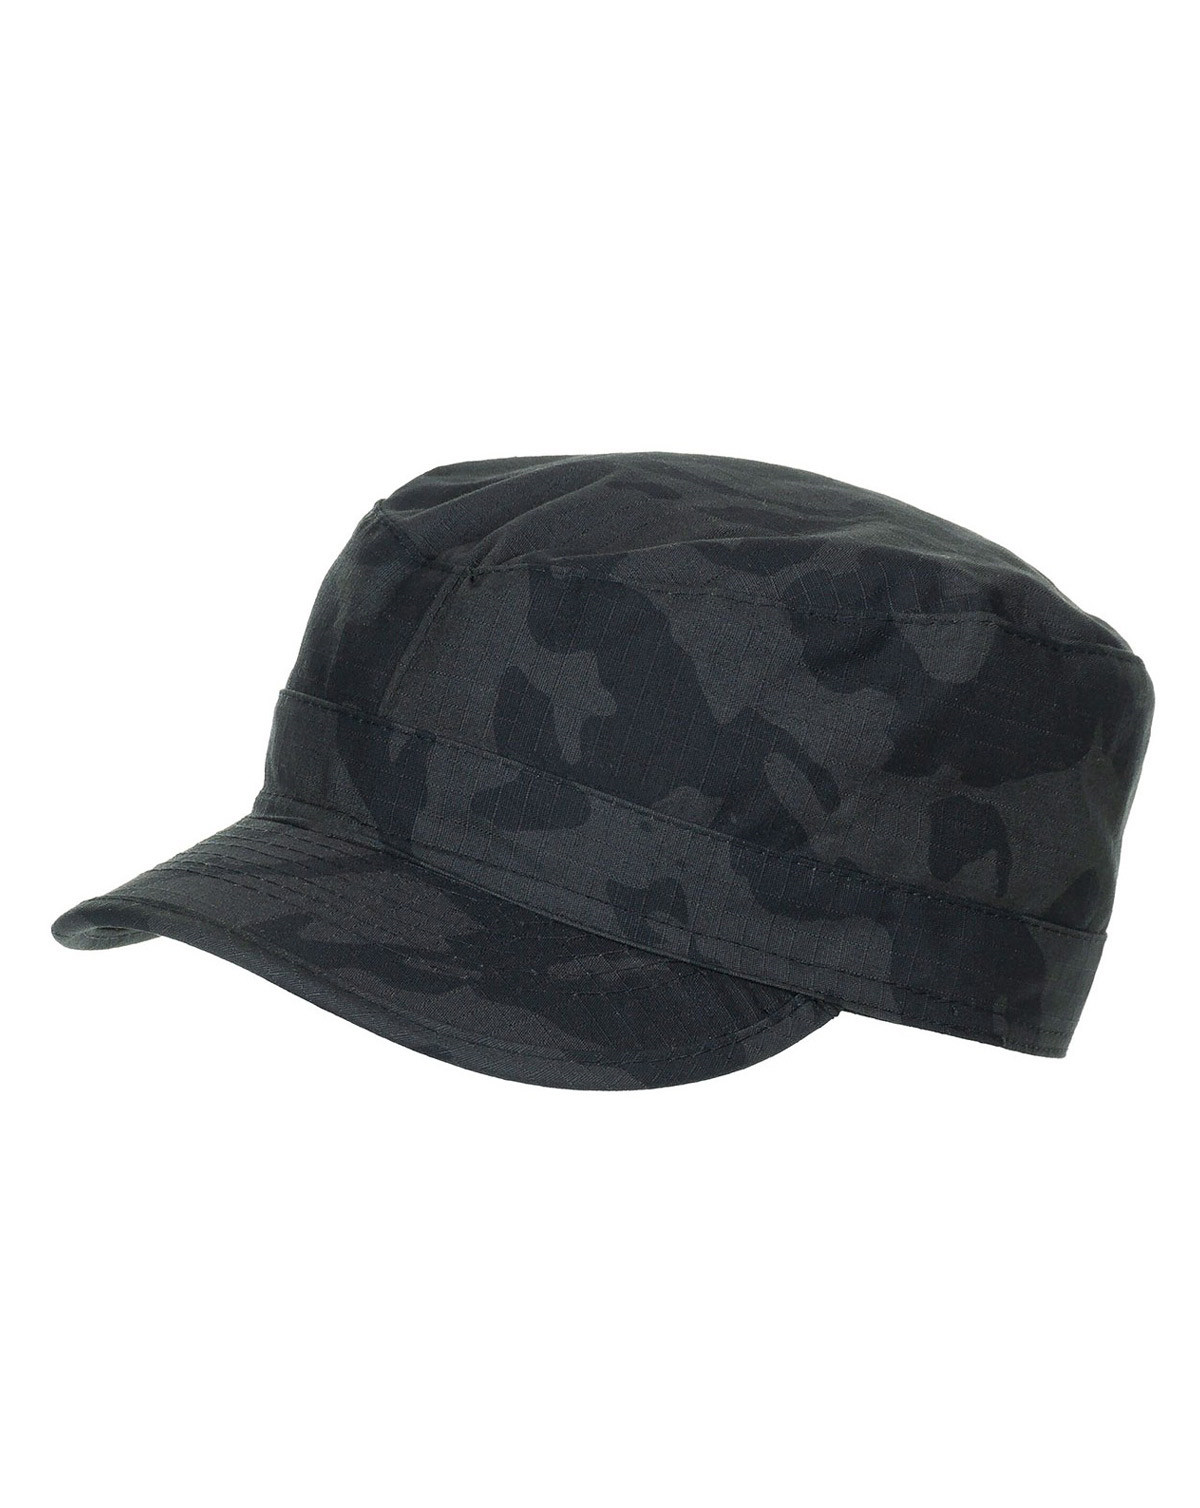 MFH U.S. Army Caps, div. Camouflager (Black Camo, 2XL)